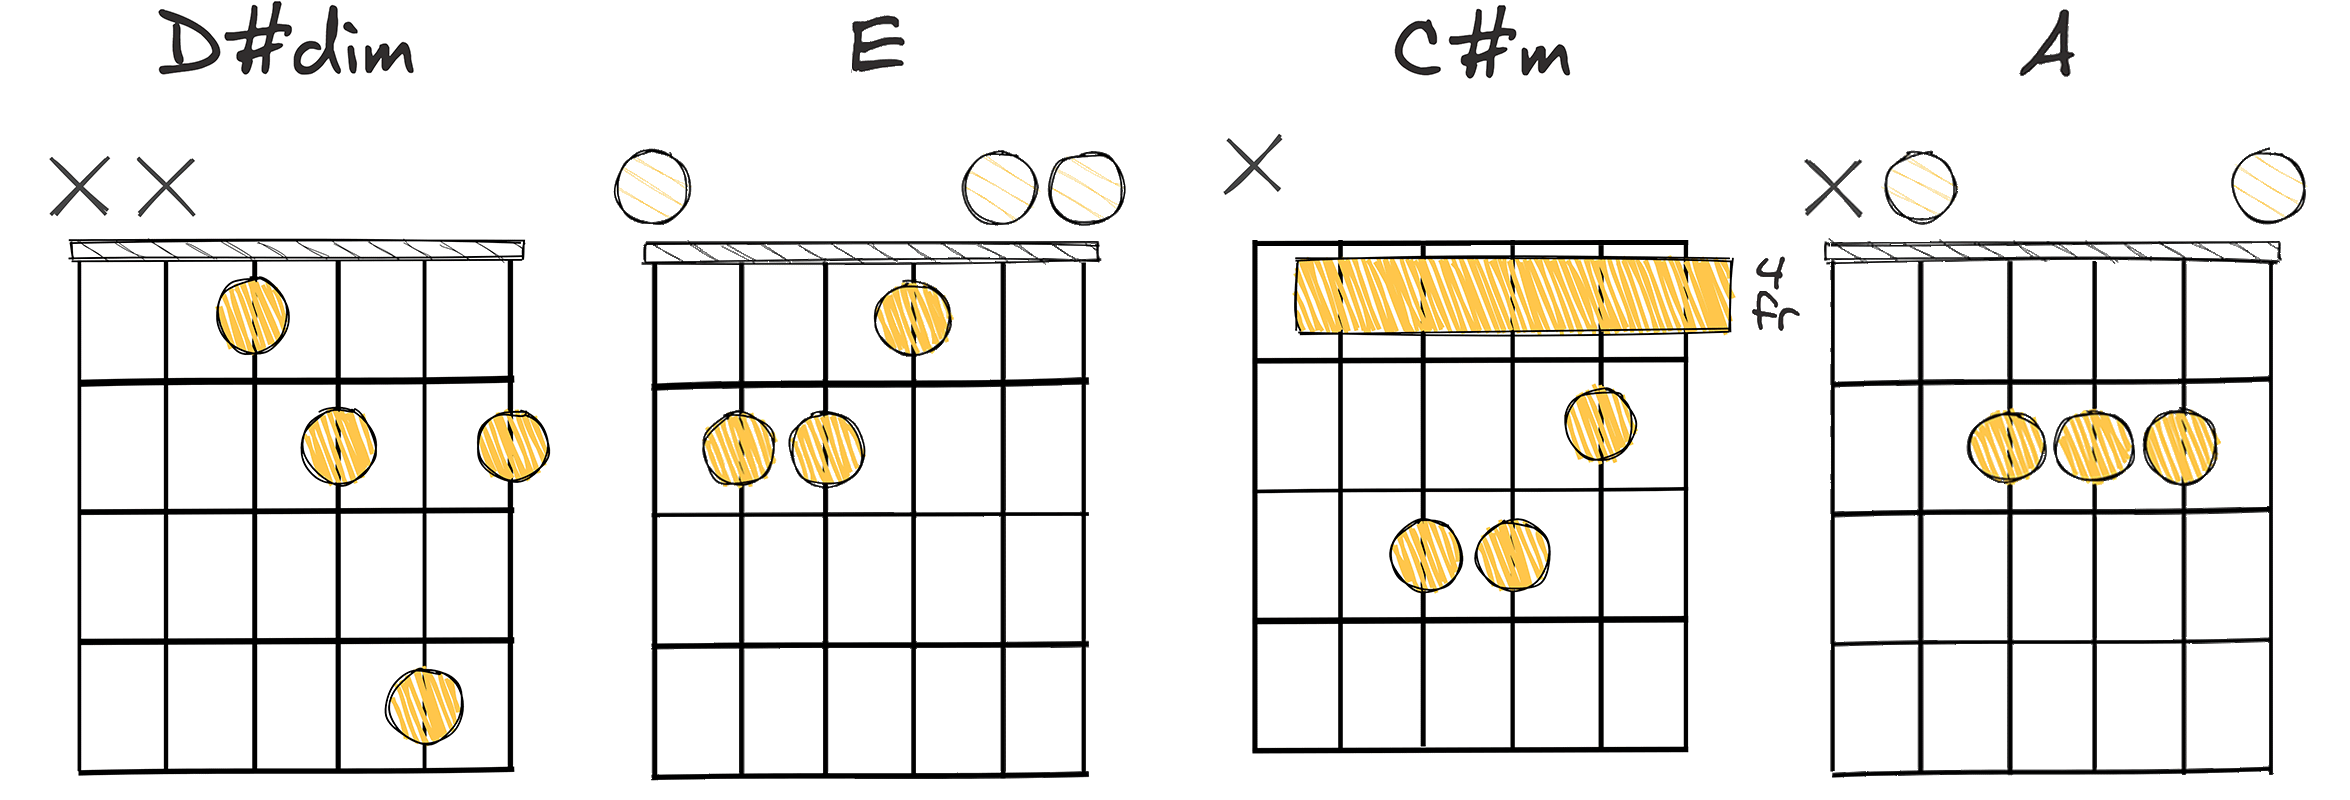 vii-I-vi-IV (7-1-6-4) chords diagram